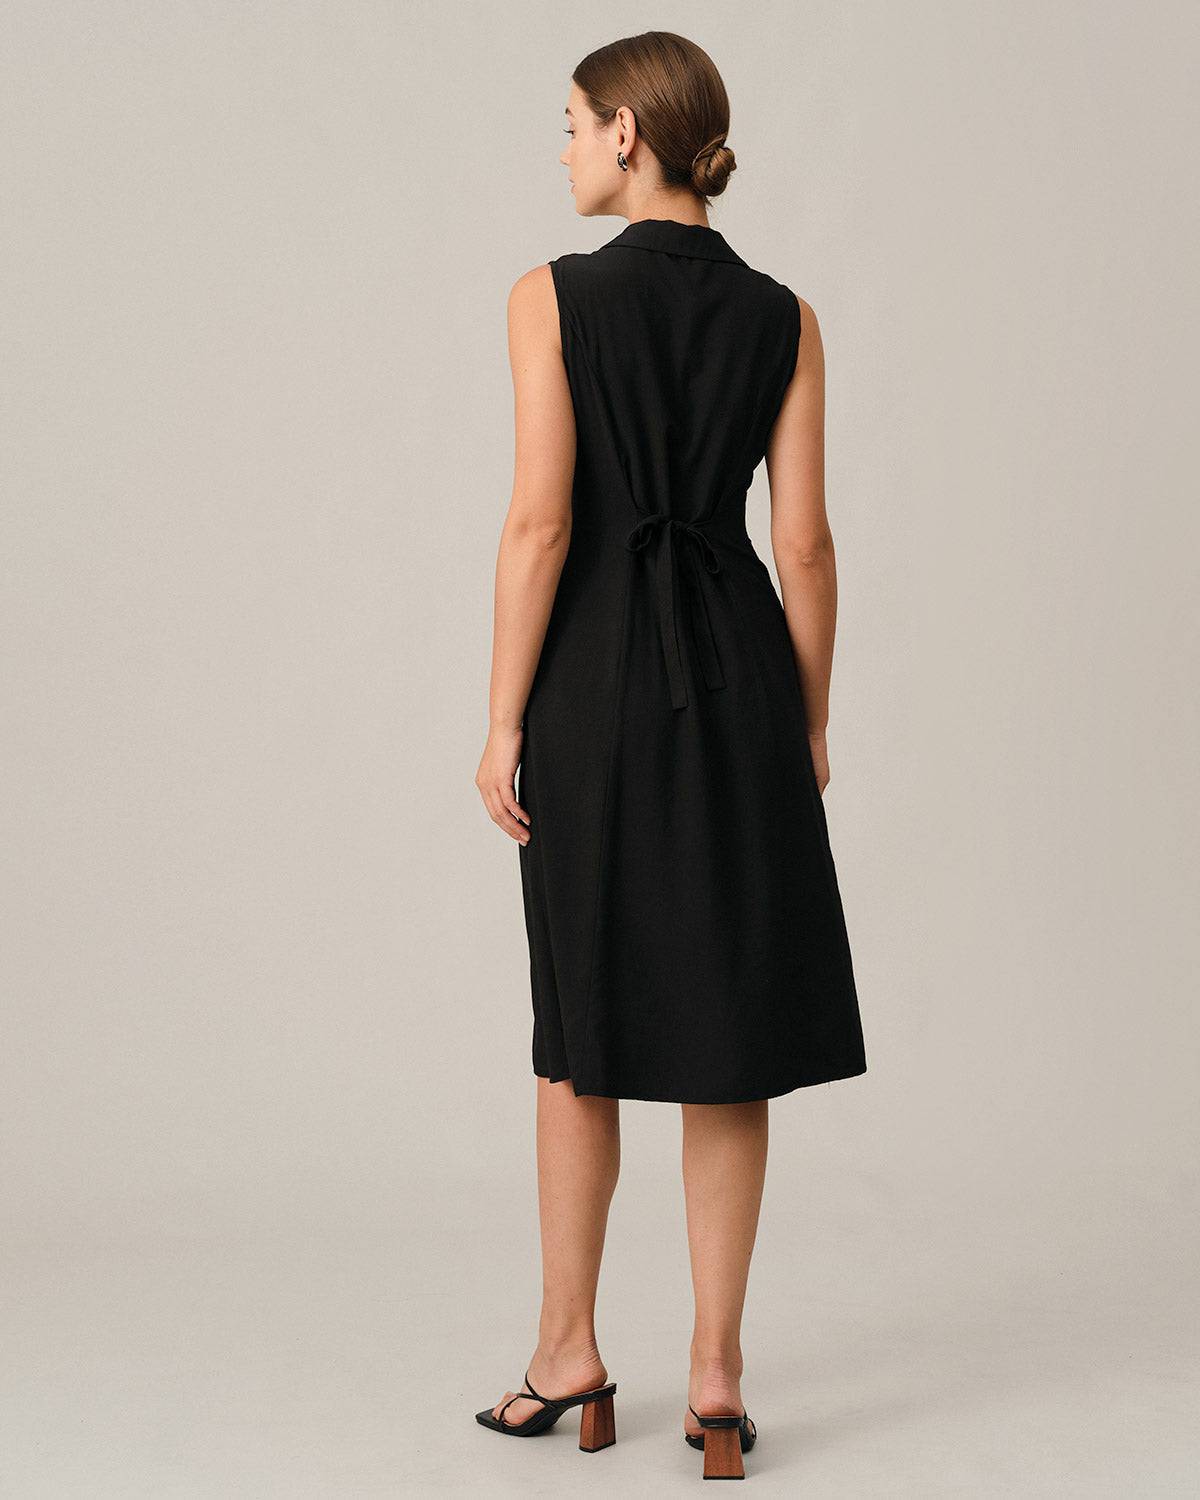 The Black V-Neck Tunic Sleeveless RIHOAS Black - Solid Neck Dress Black Midi Midi Dresses Dress | - - V